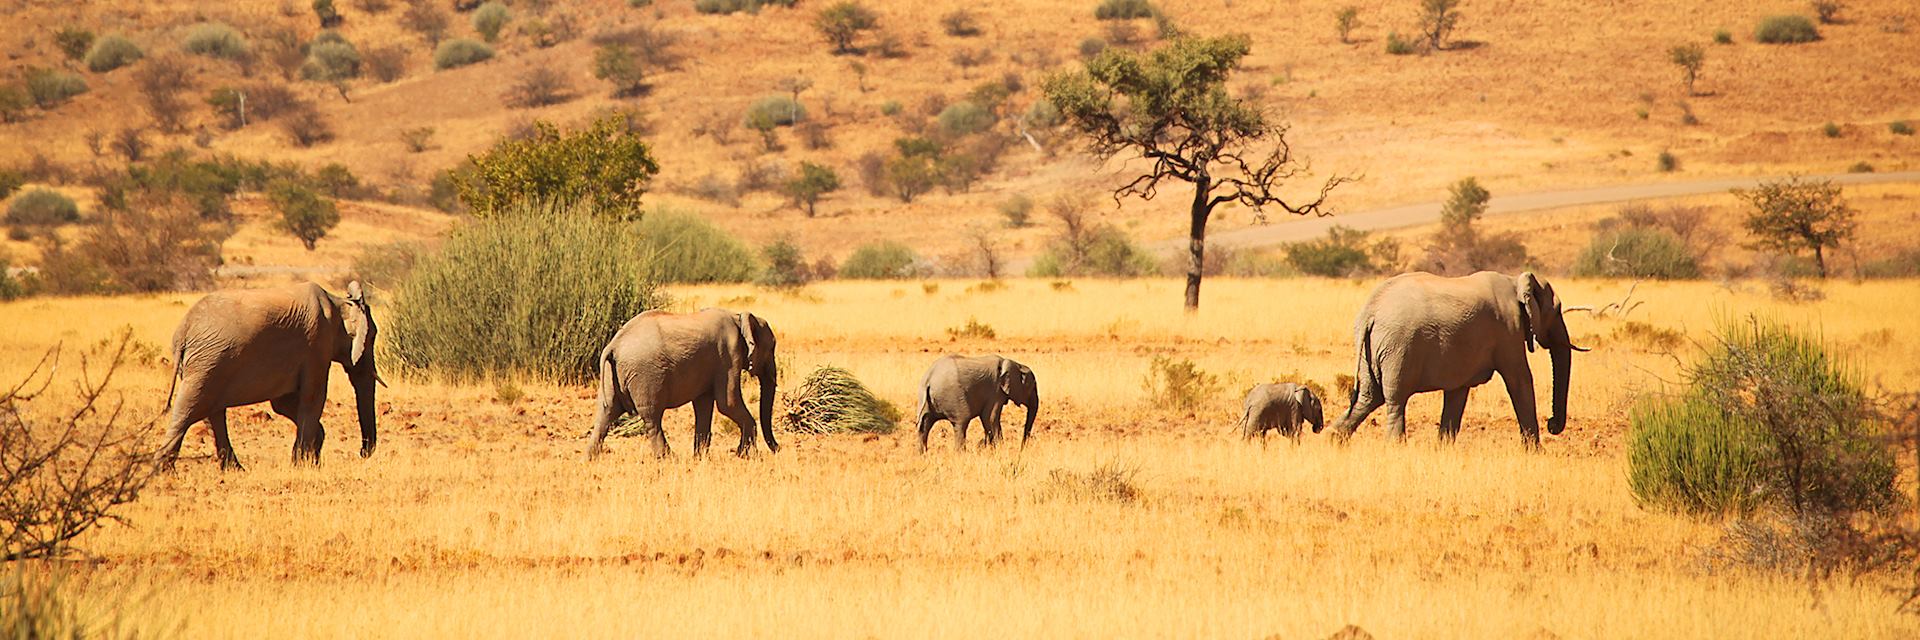 Family of elephants, Namibia